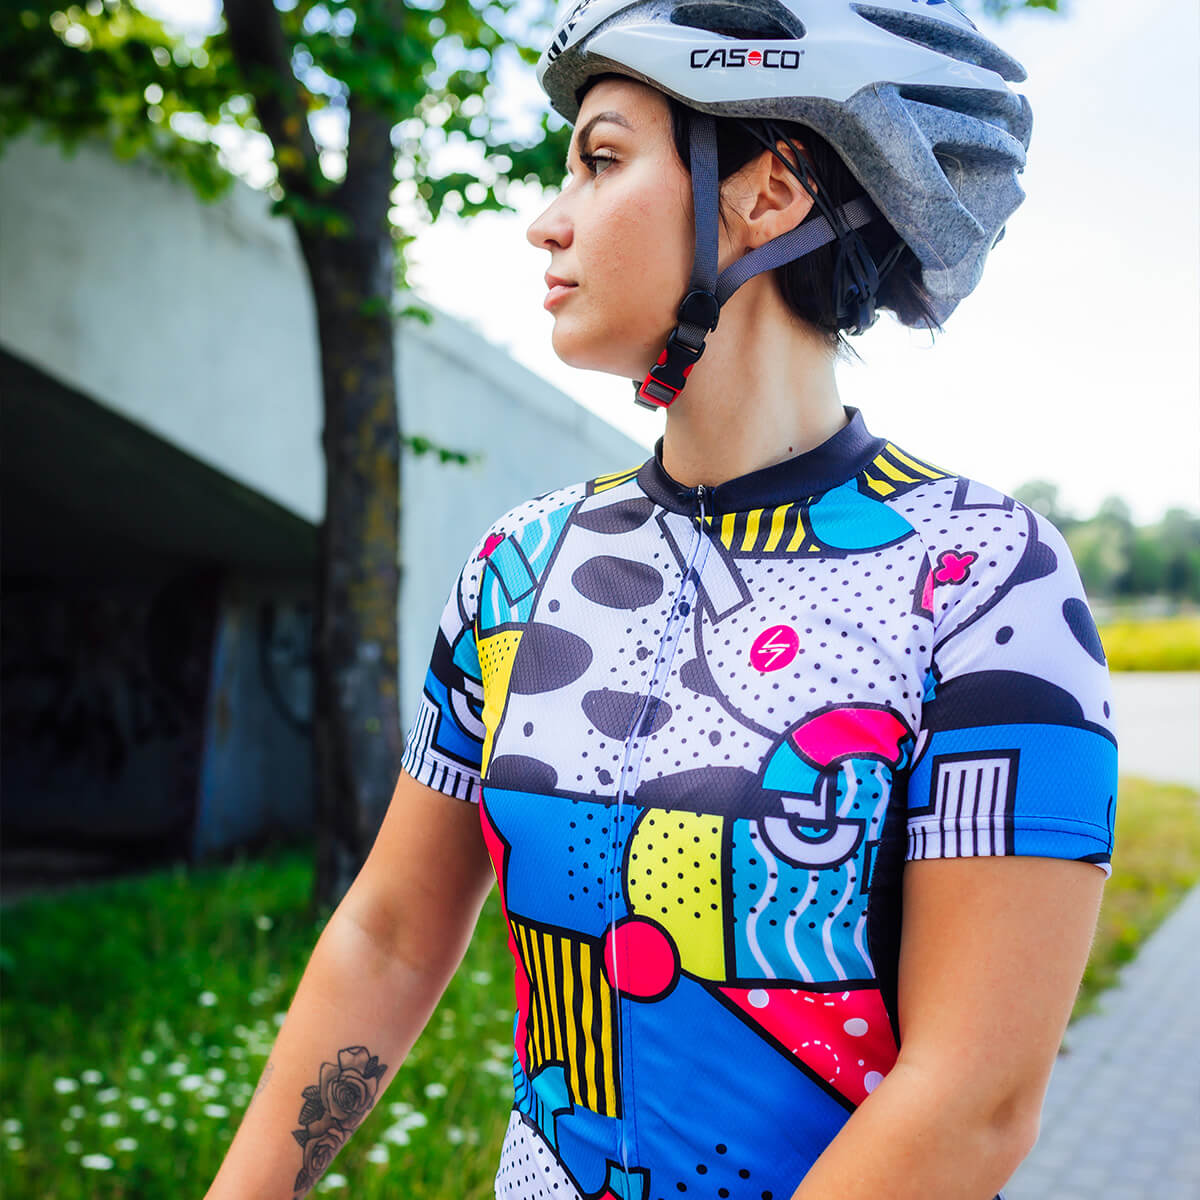 STEEP Women's Cycling Jerseys  Stylish, Comfortable & High